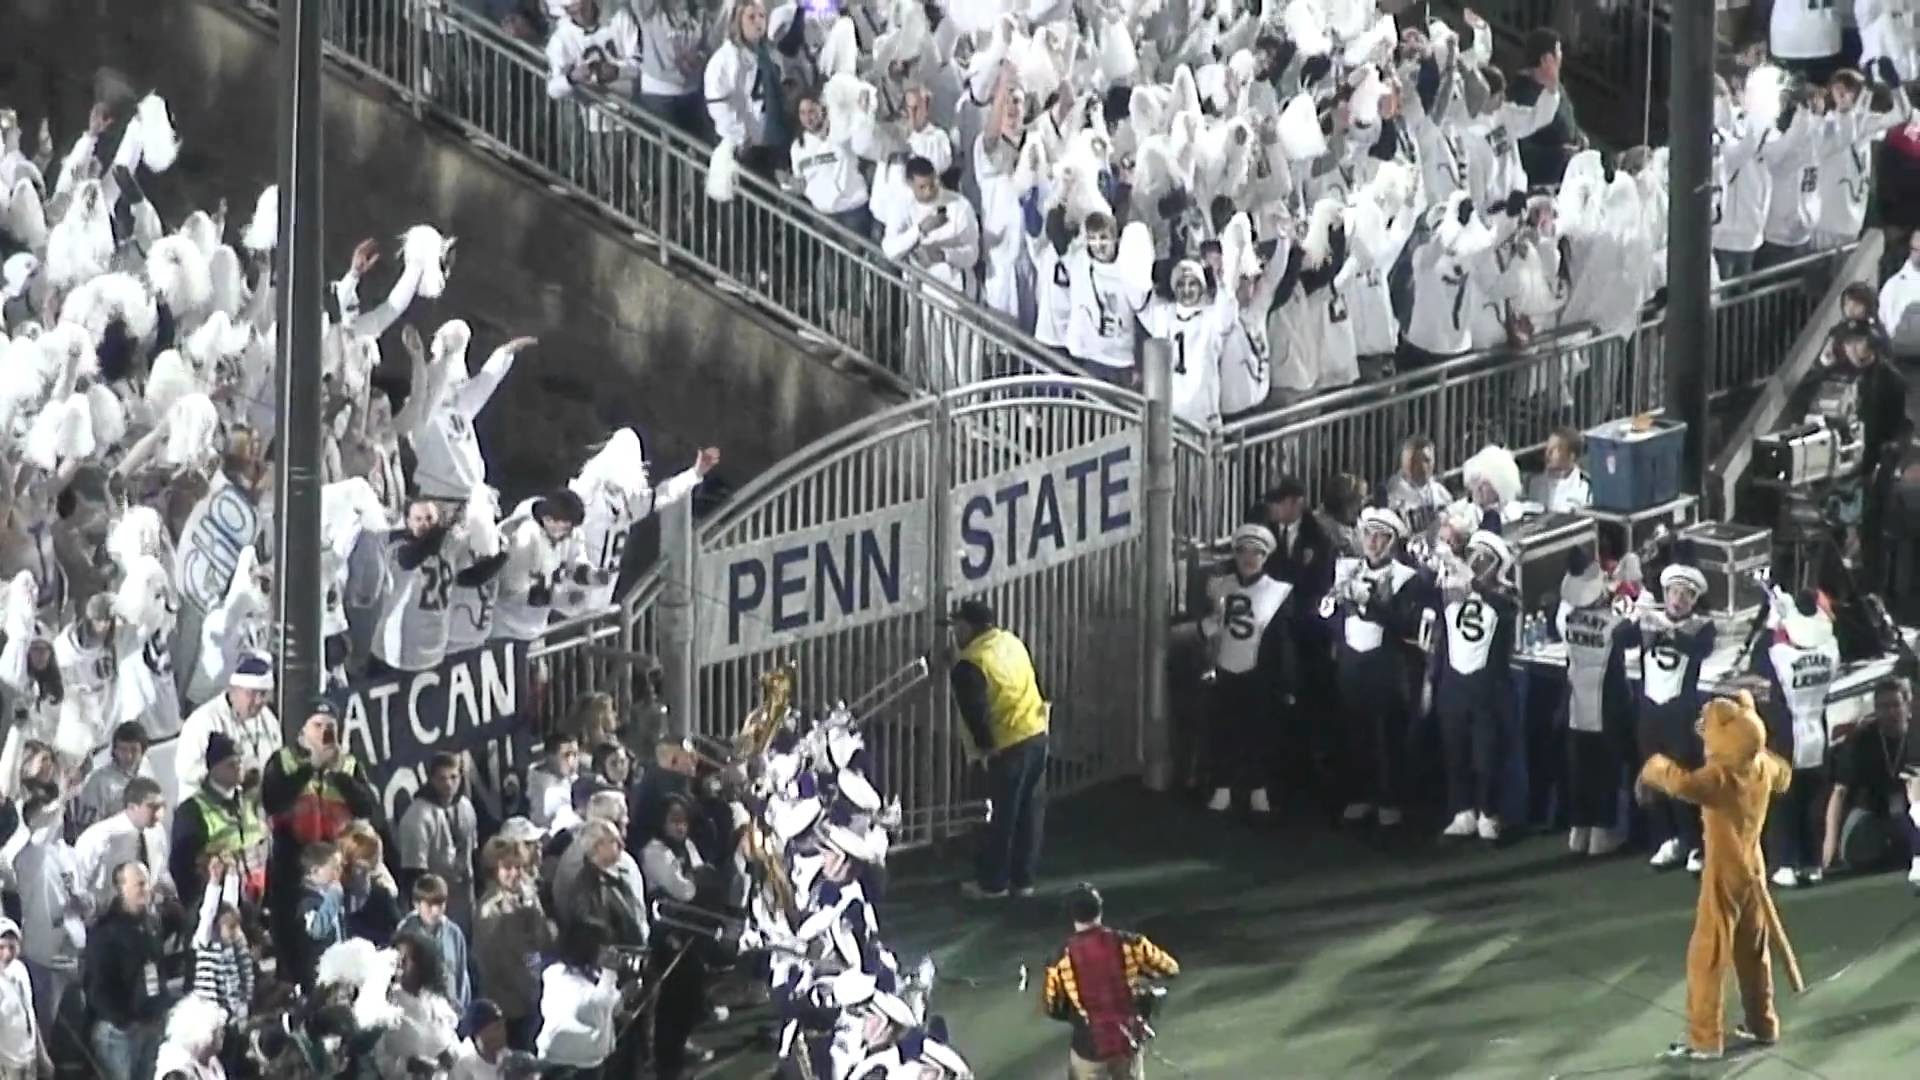 1920x1080 Penn State vs. Michigan Running Through the Tunnel